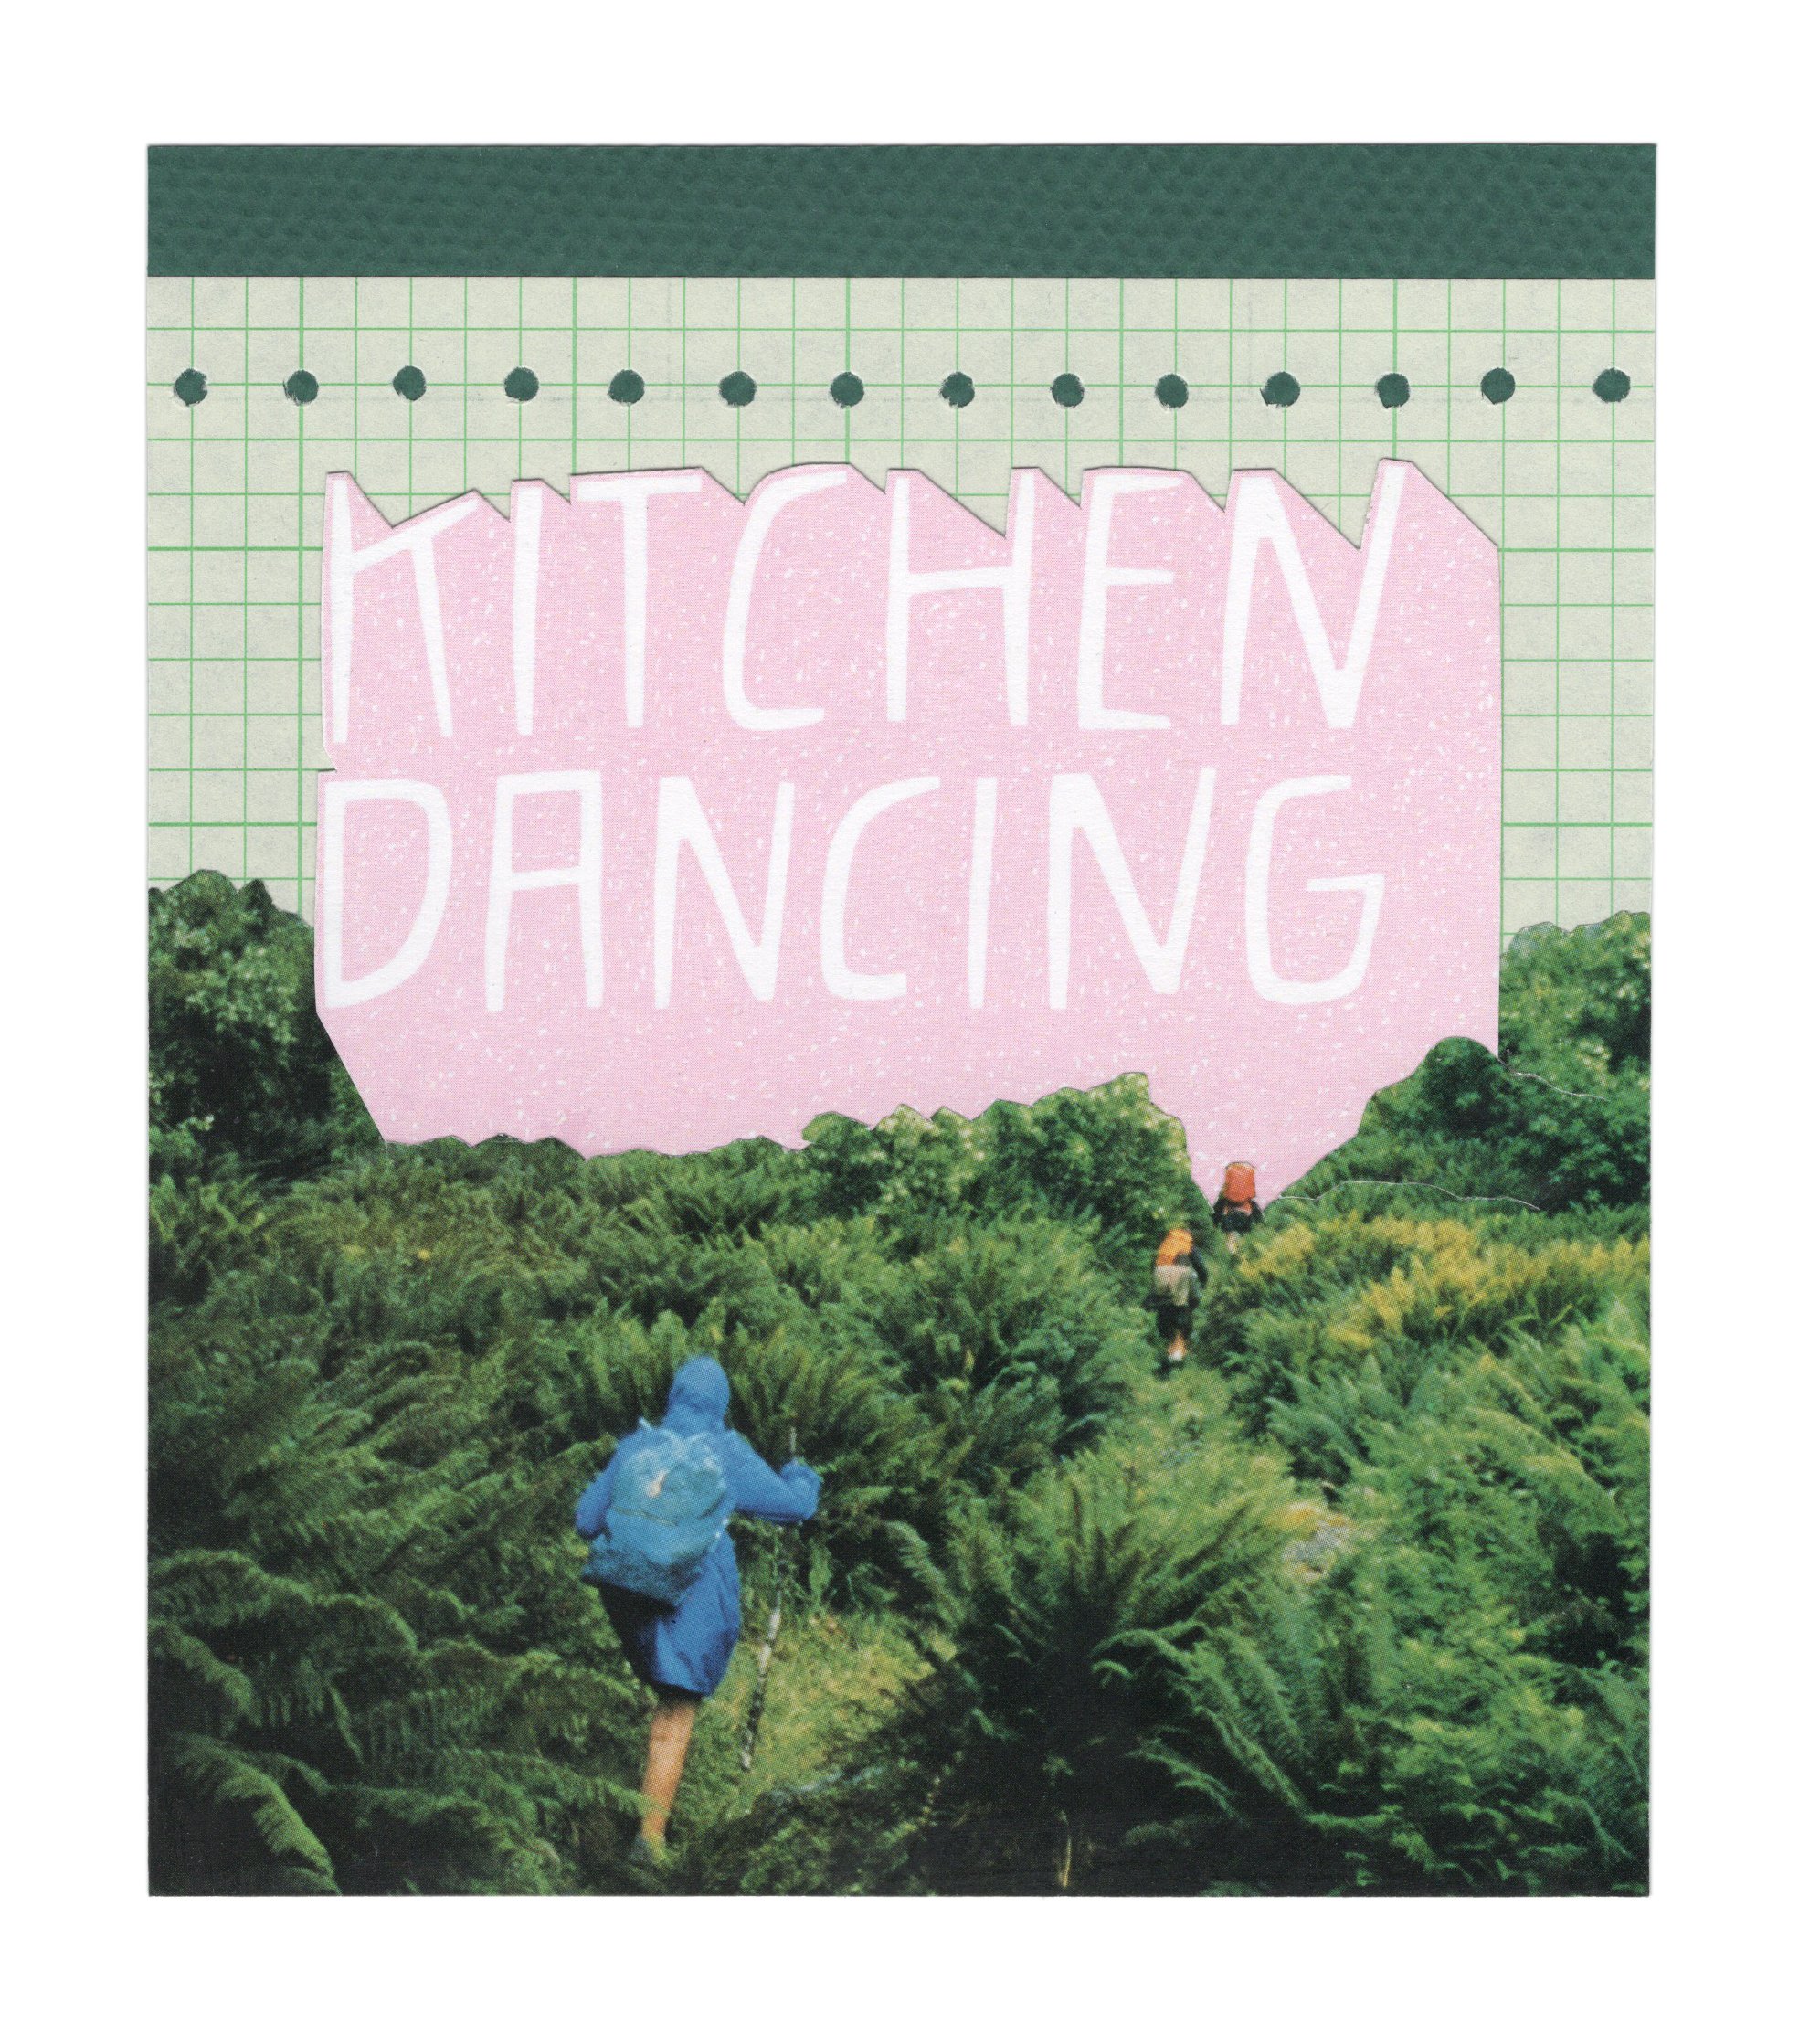 Kitchen Dancing.jpeg